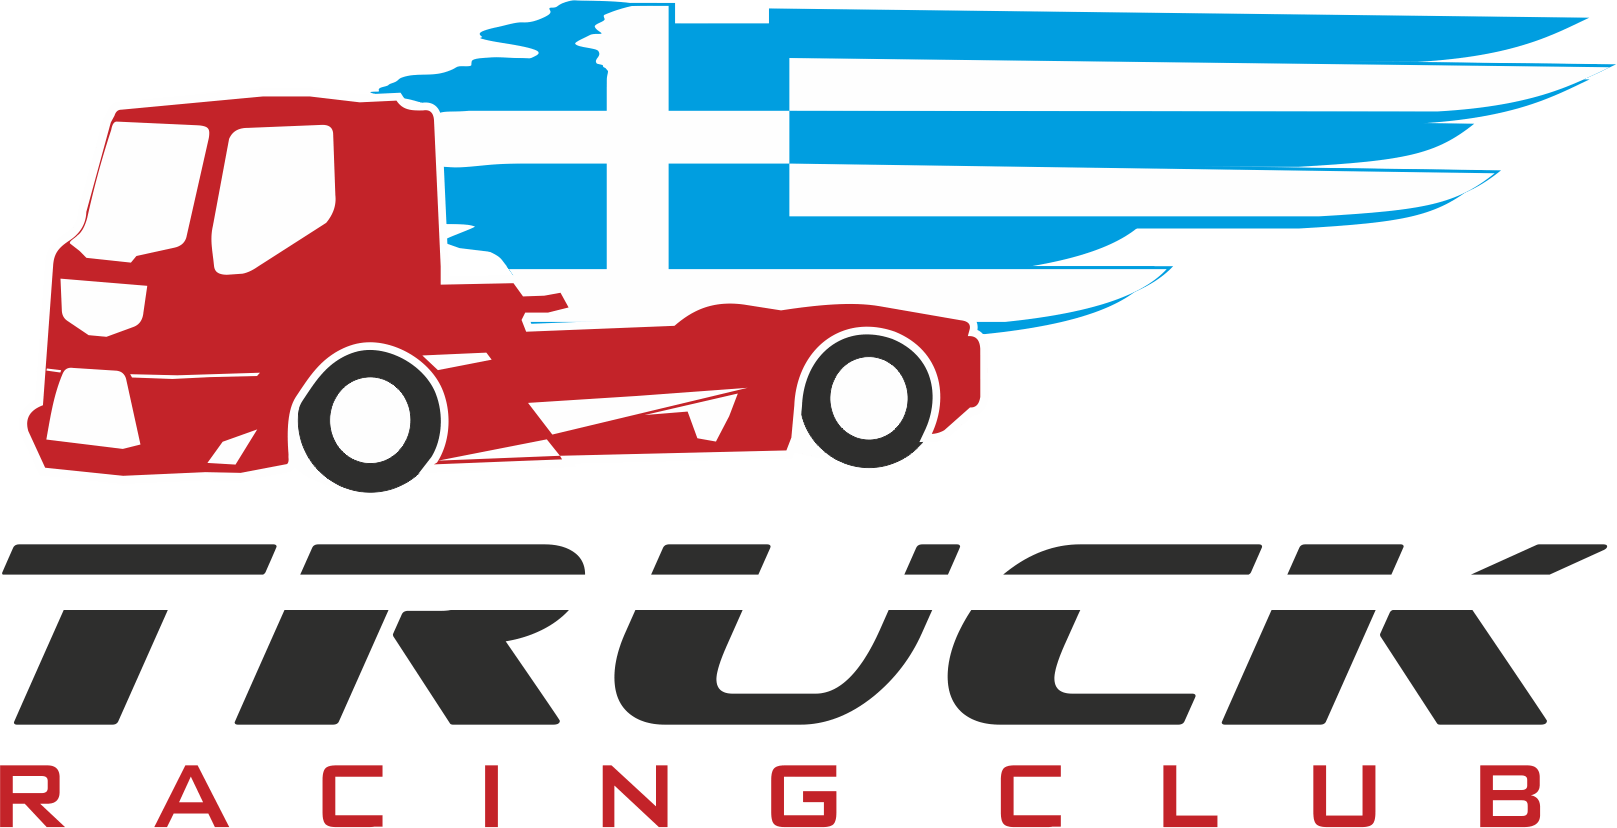 Truck Club Logo - Truck Logos